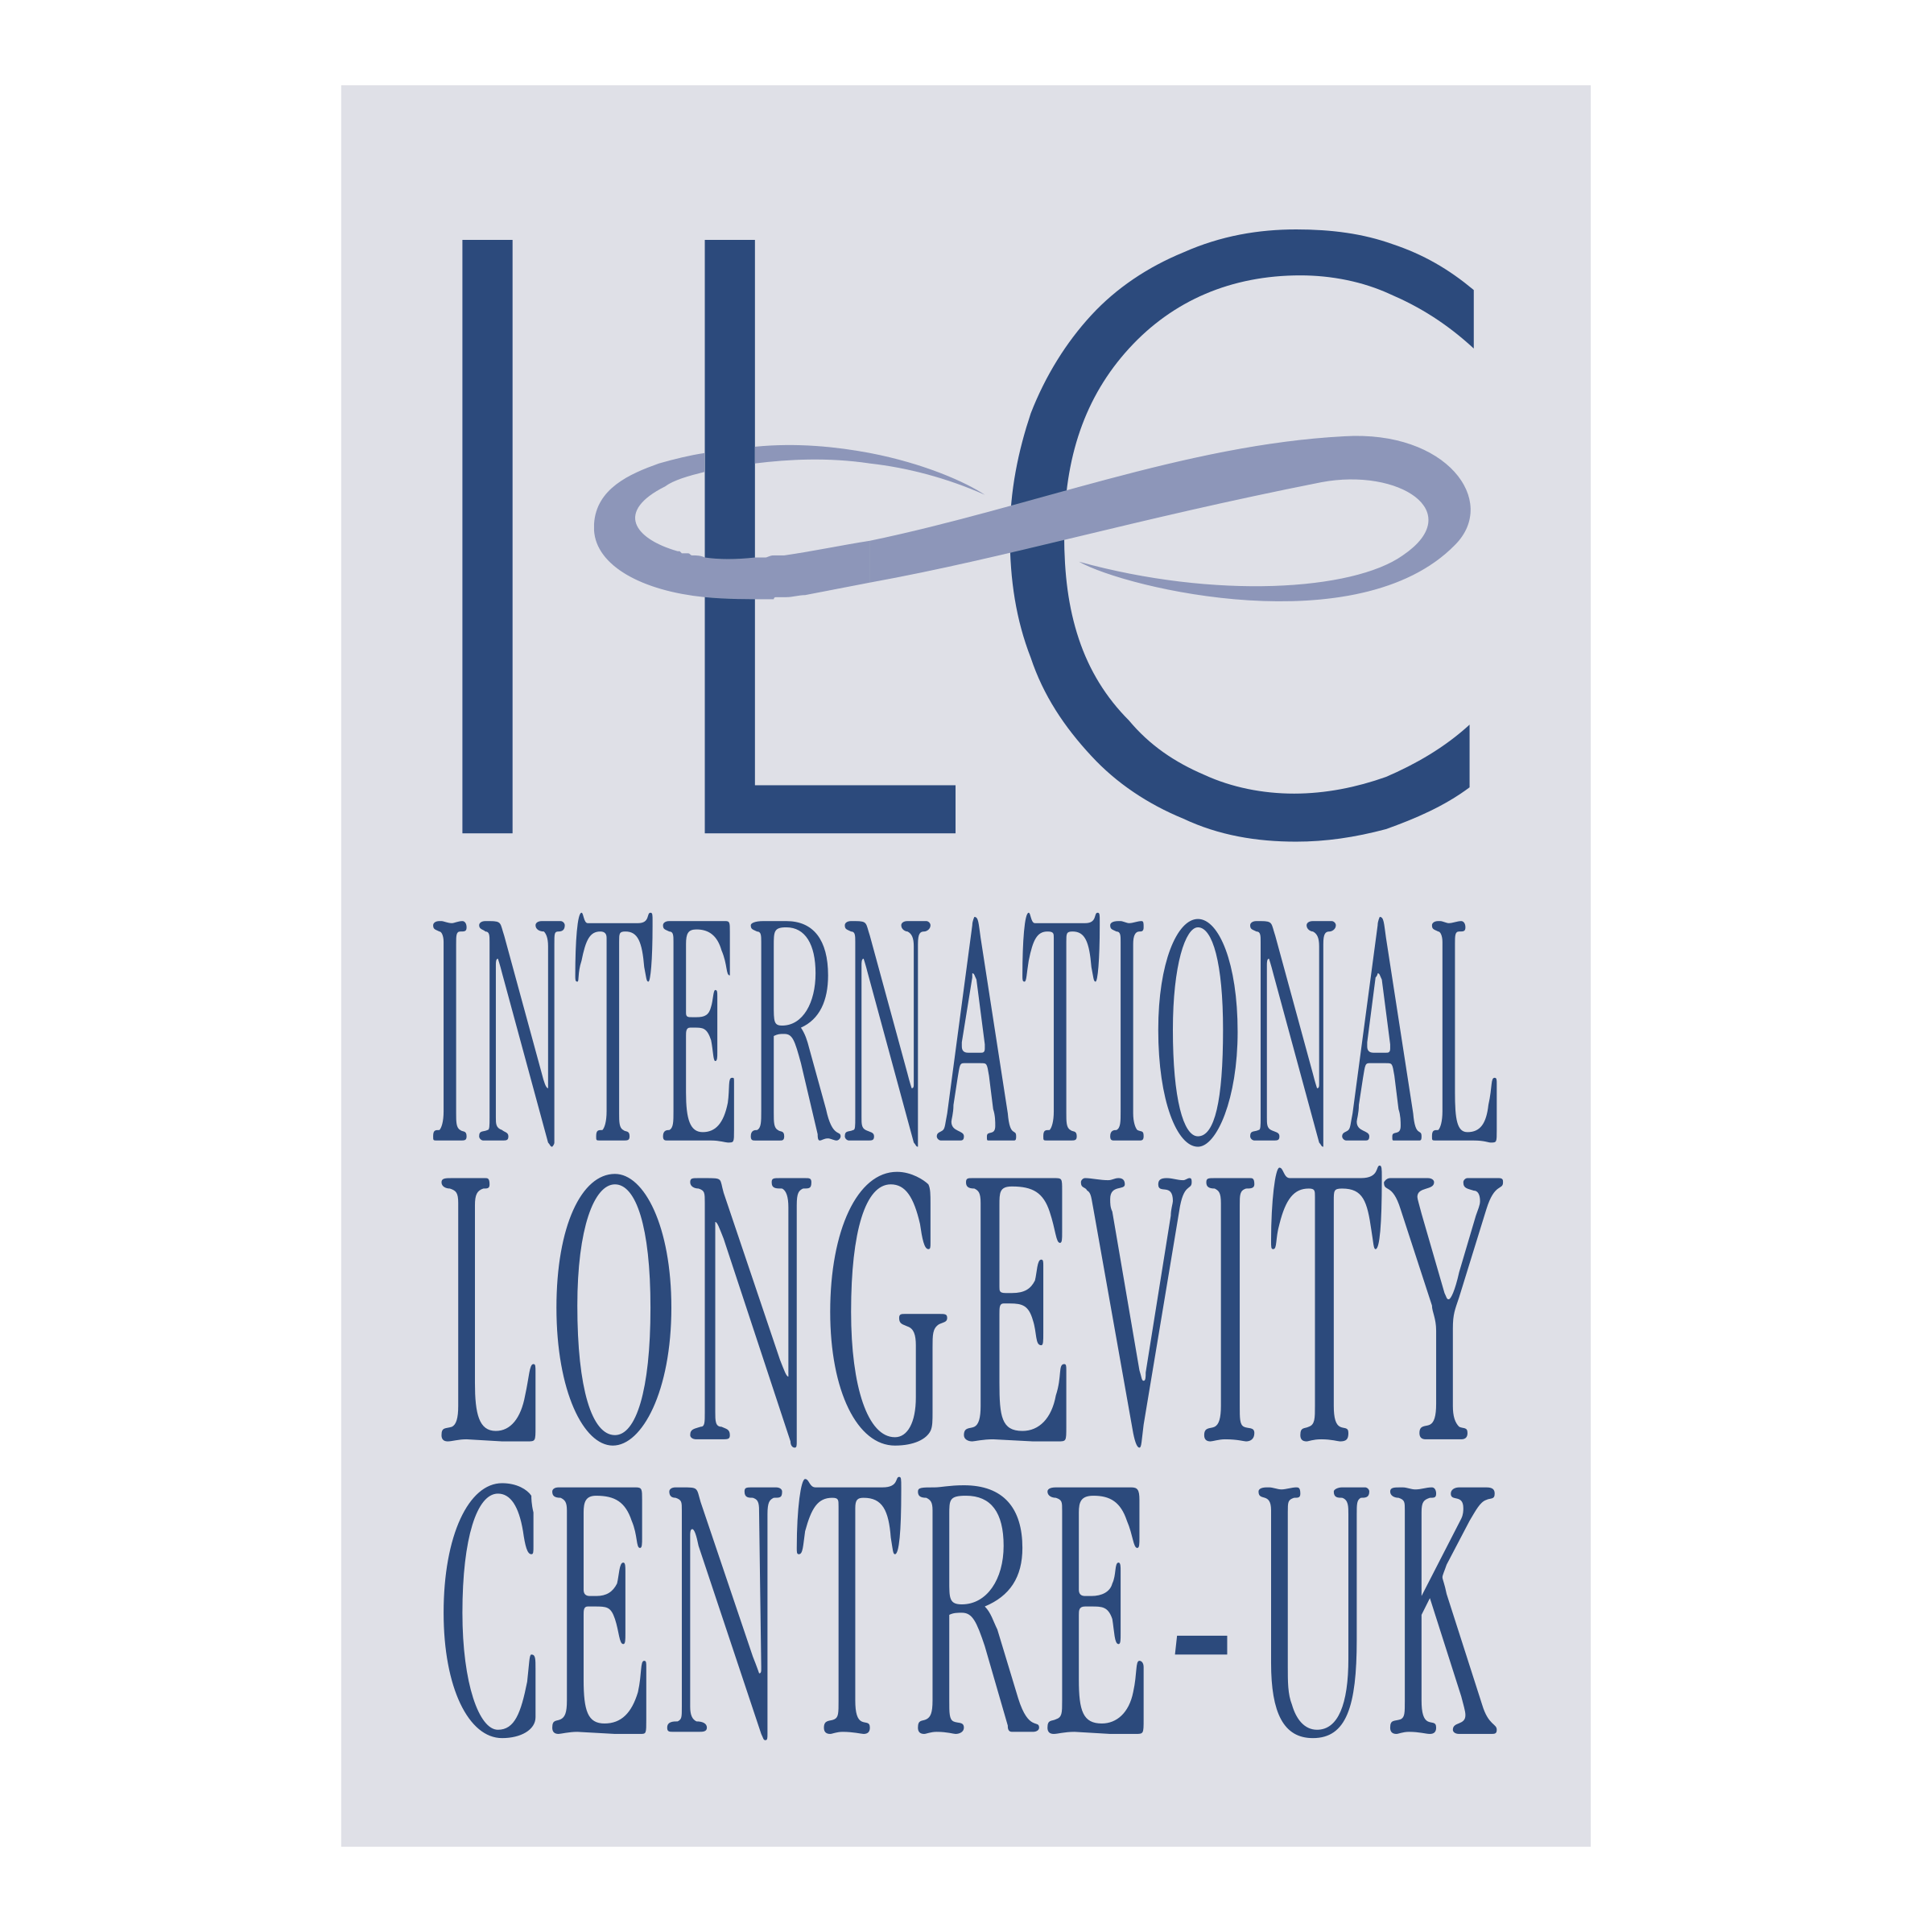 ILC Logo - ILC Logo PNG Transparent & SVG Vector - Freebie Supply